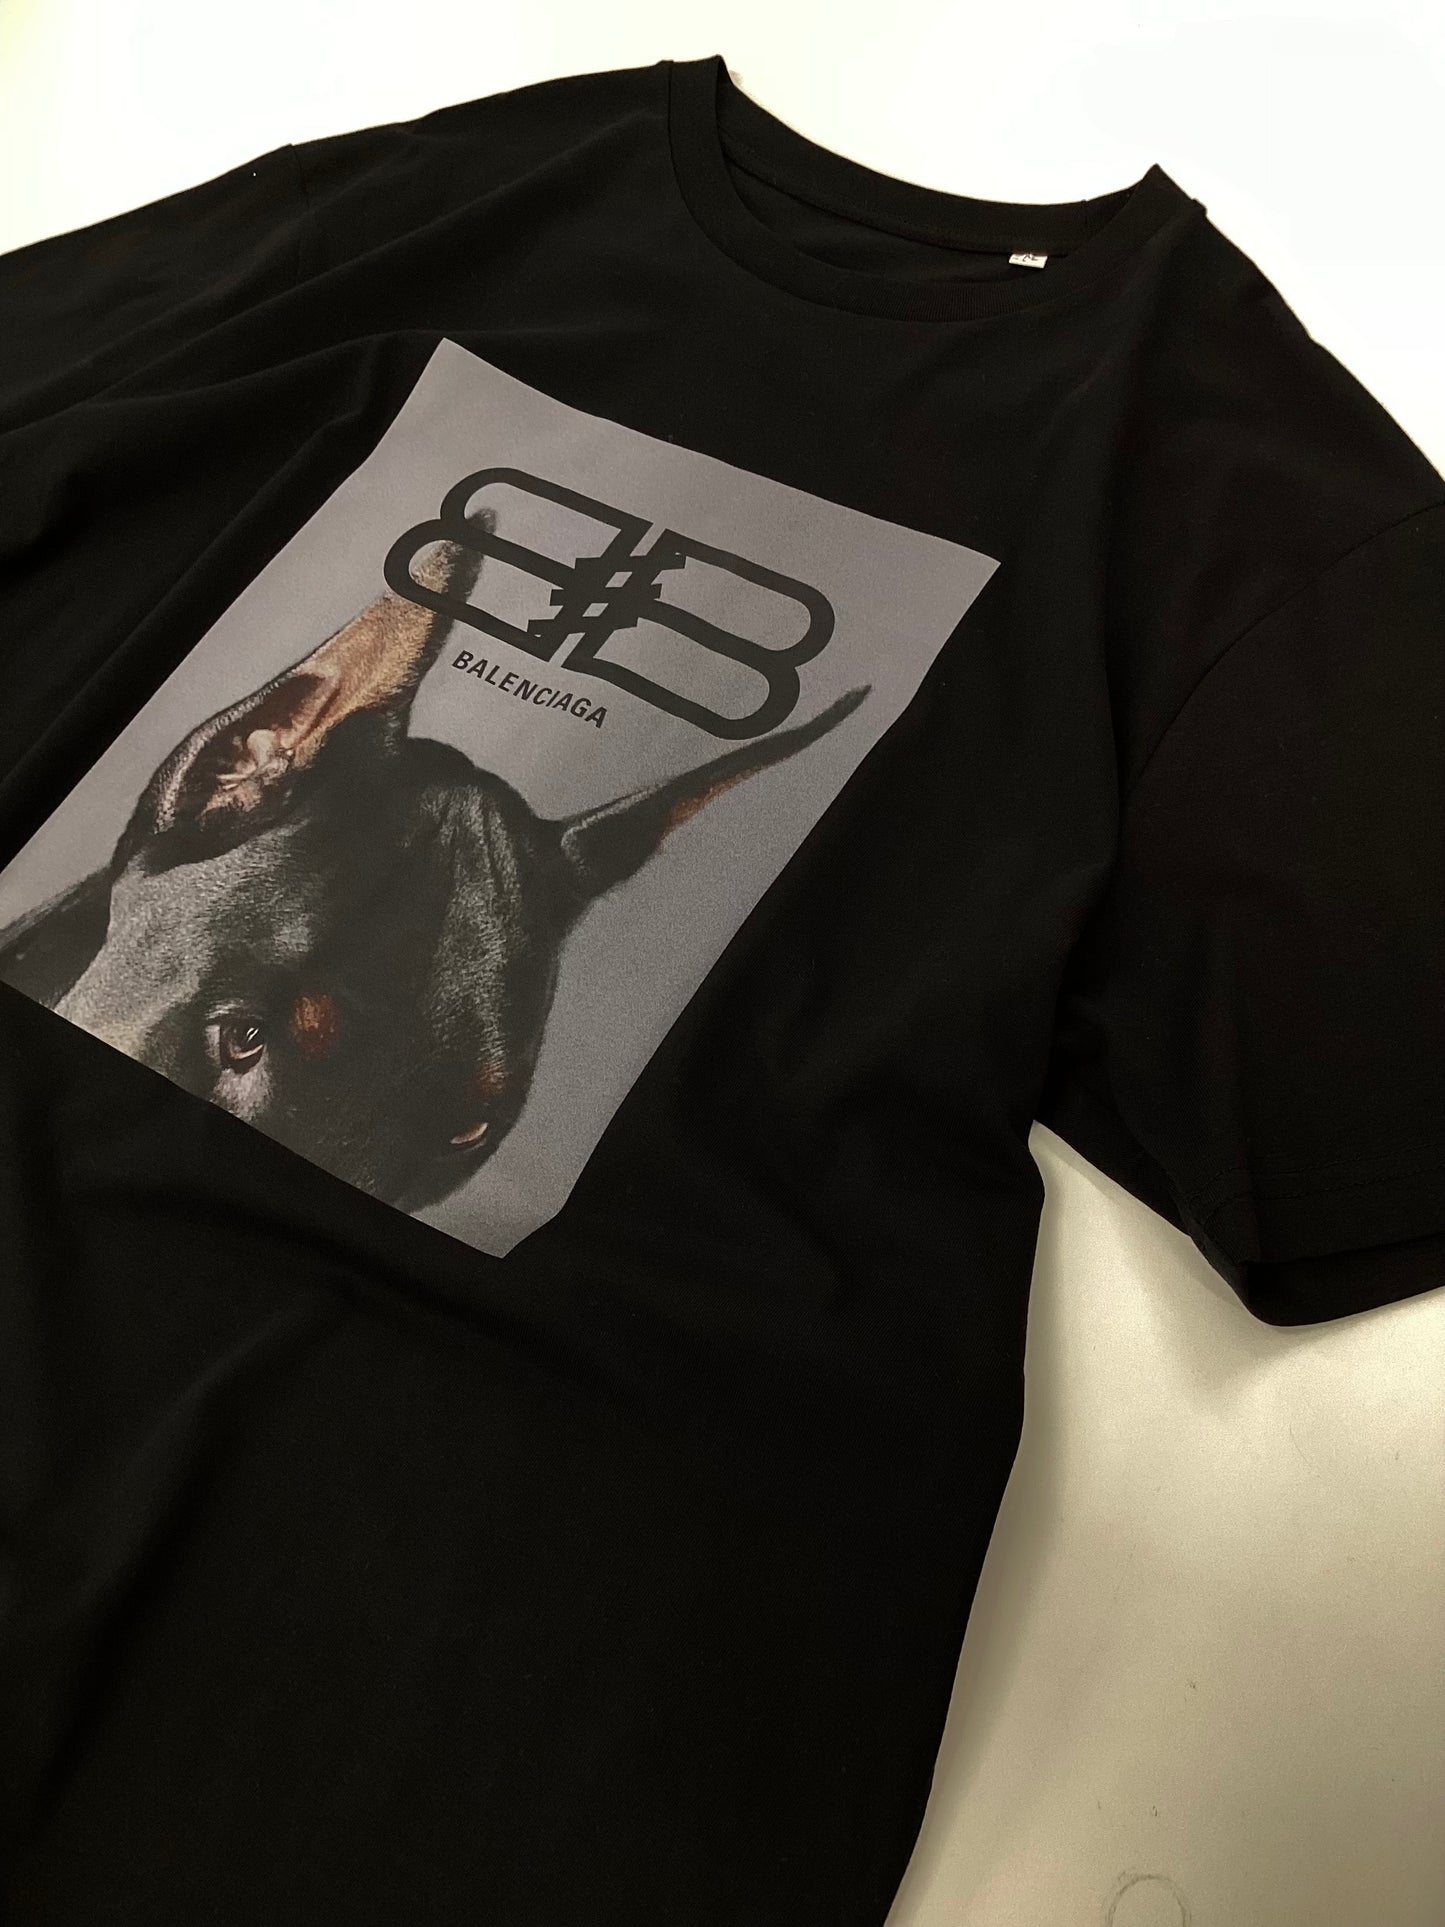 Sale Dobi T-Shirt Black - XL